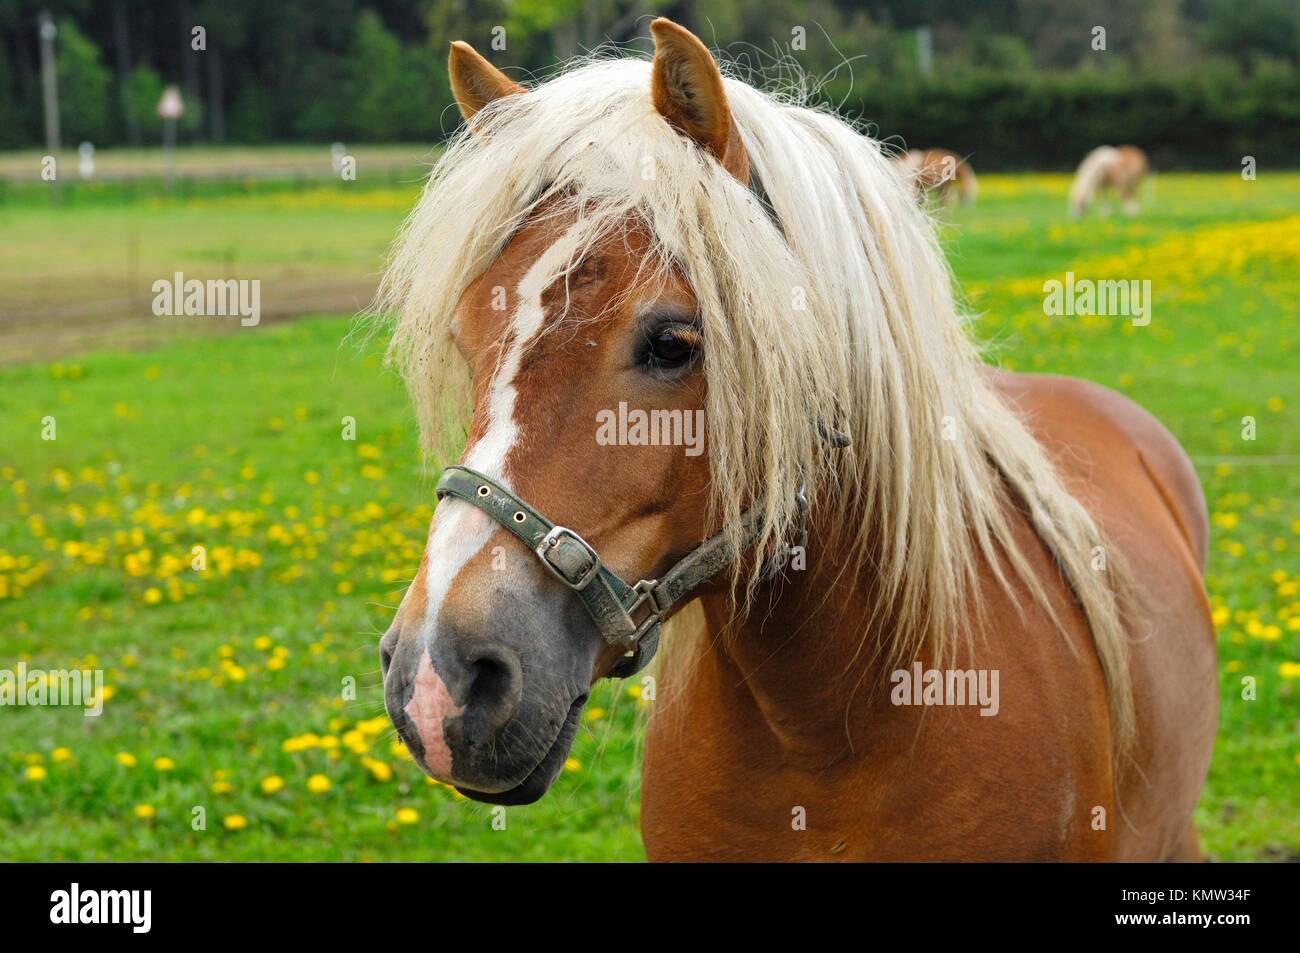 Haflinger Horse Equus caballus, stallion on a meadow Stock Photo